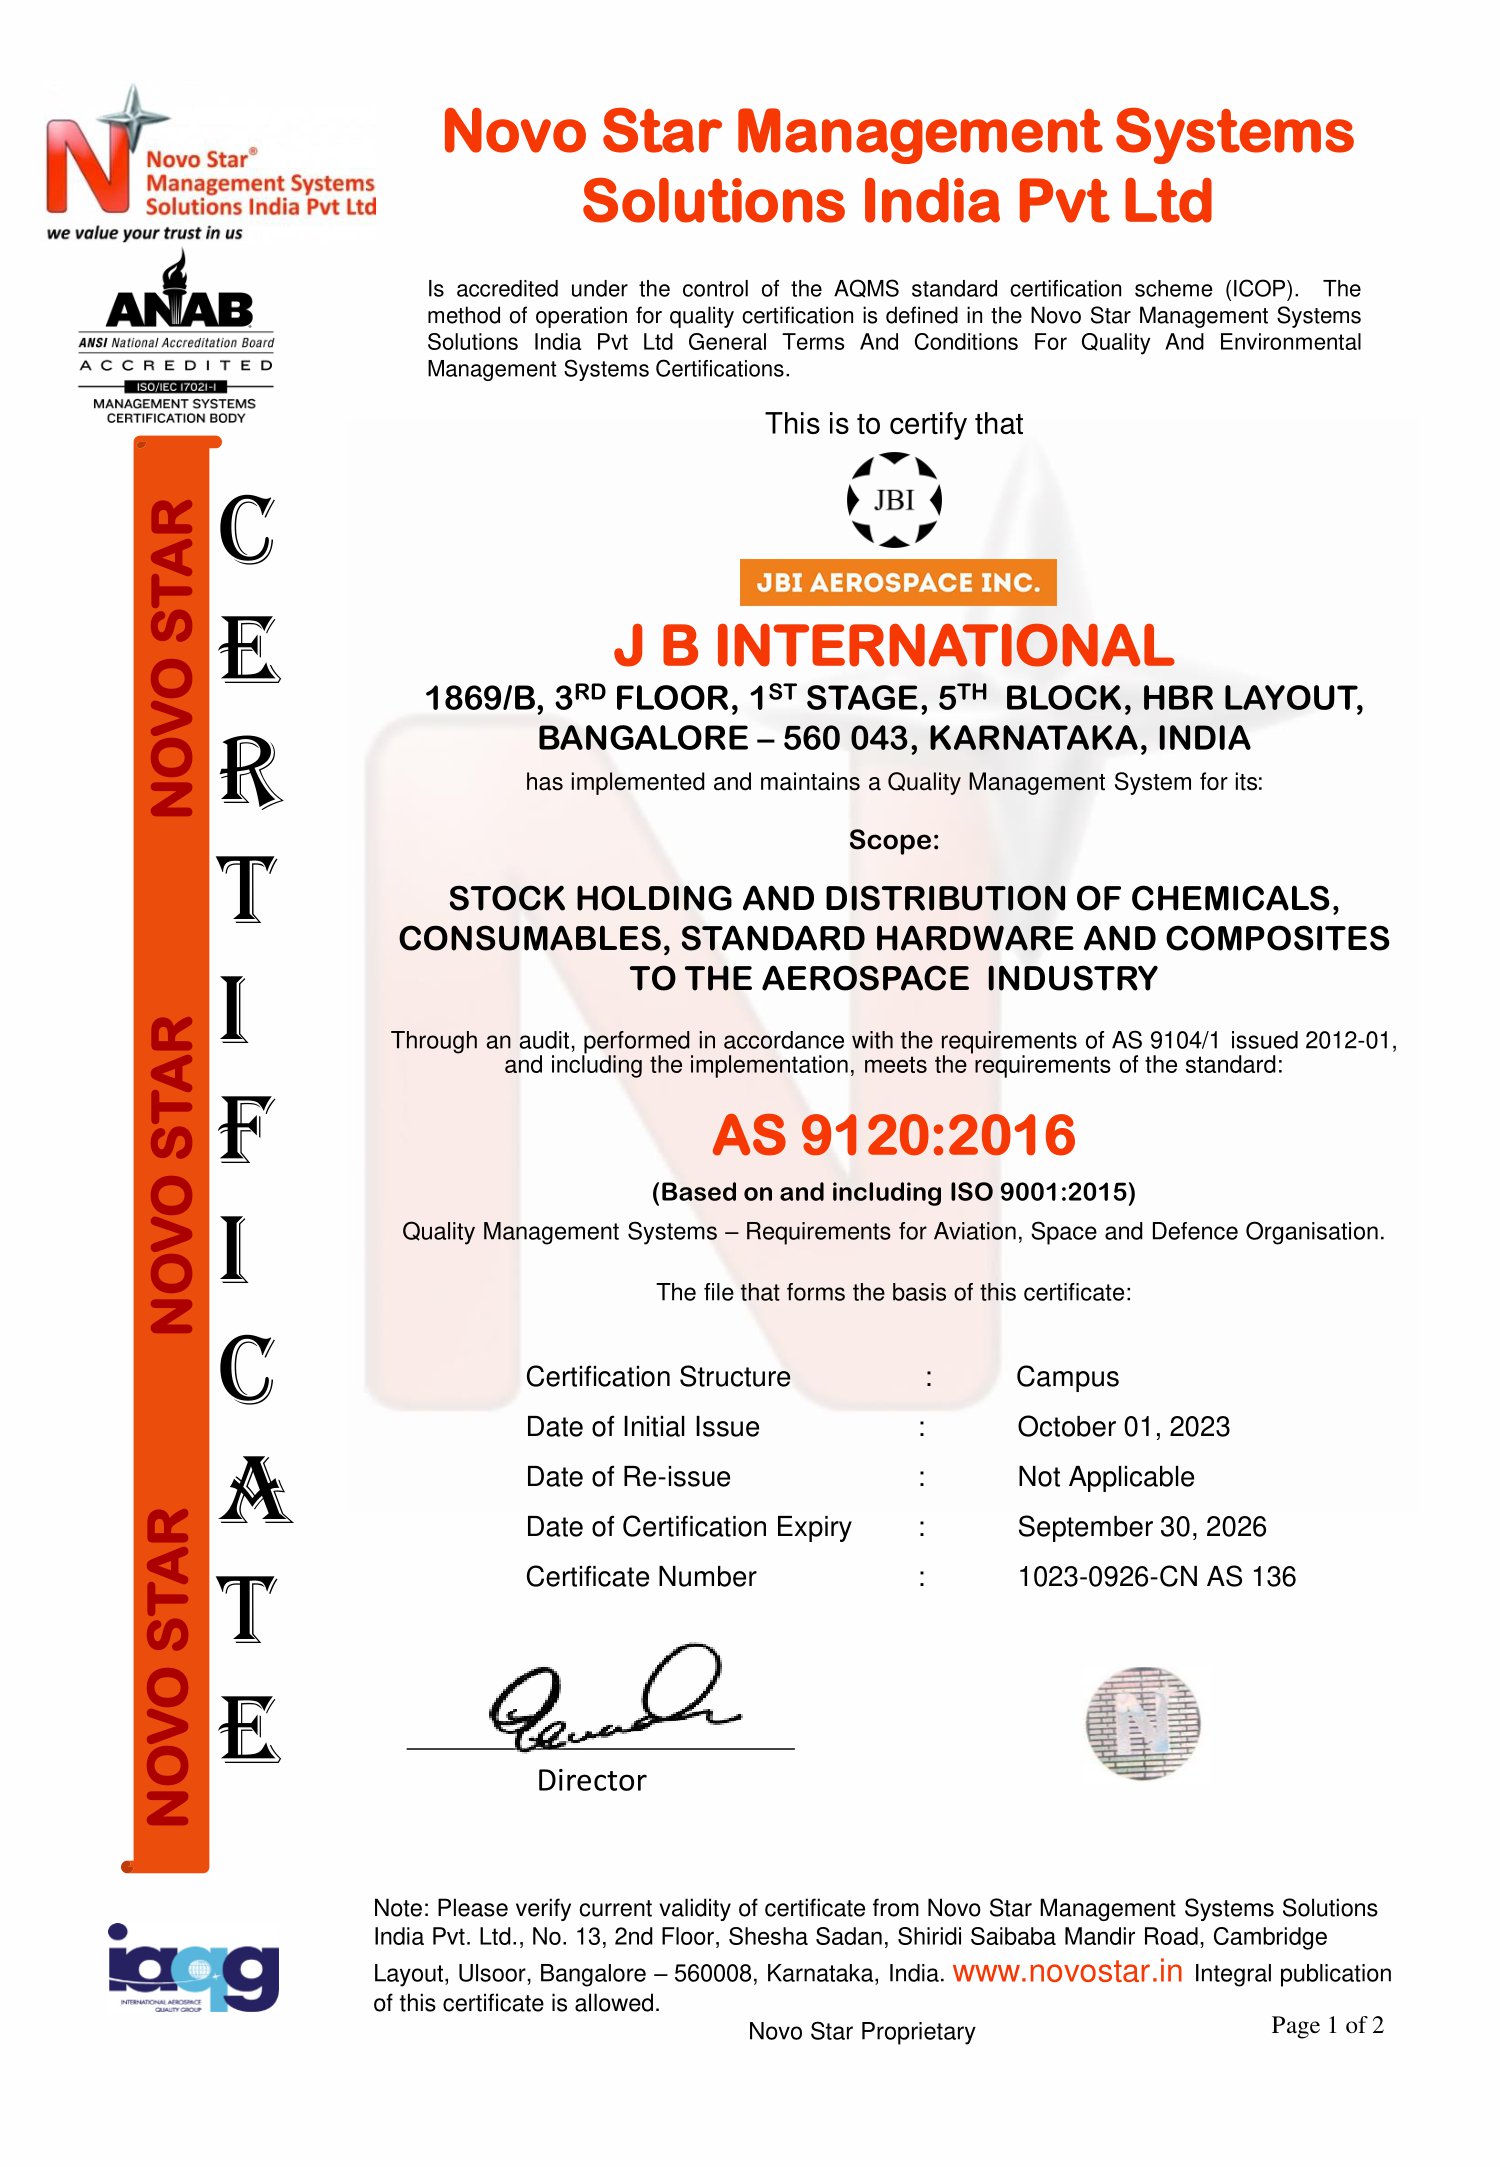 jbi certificate